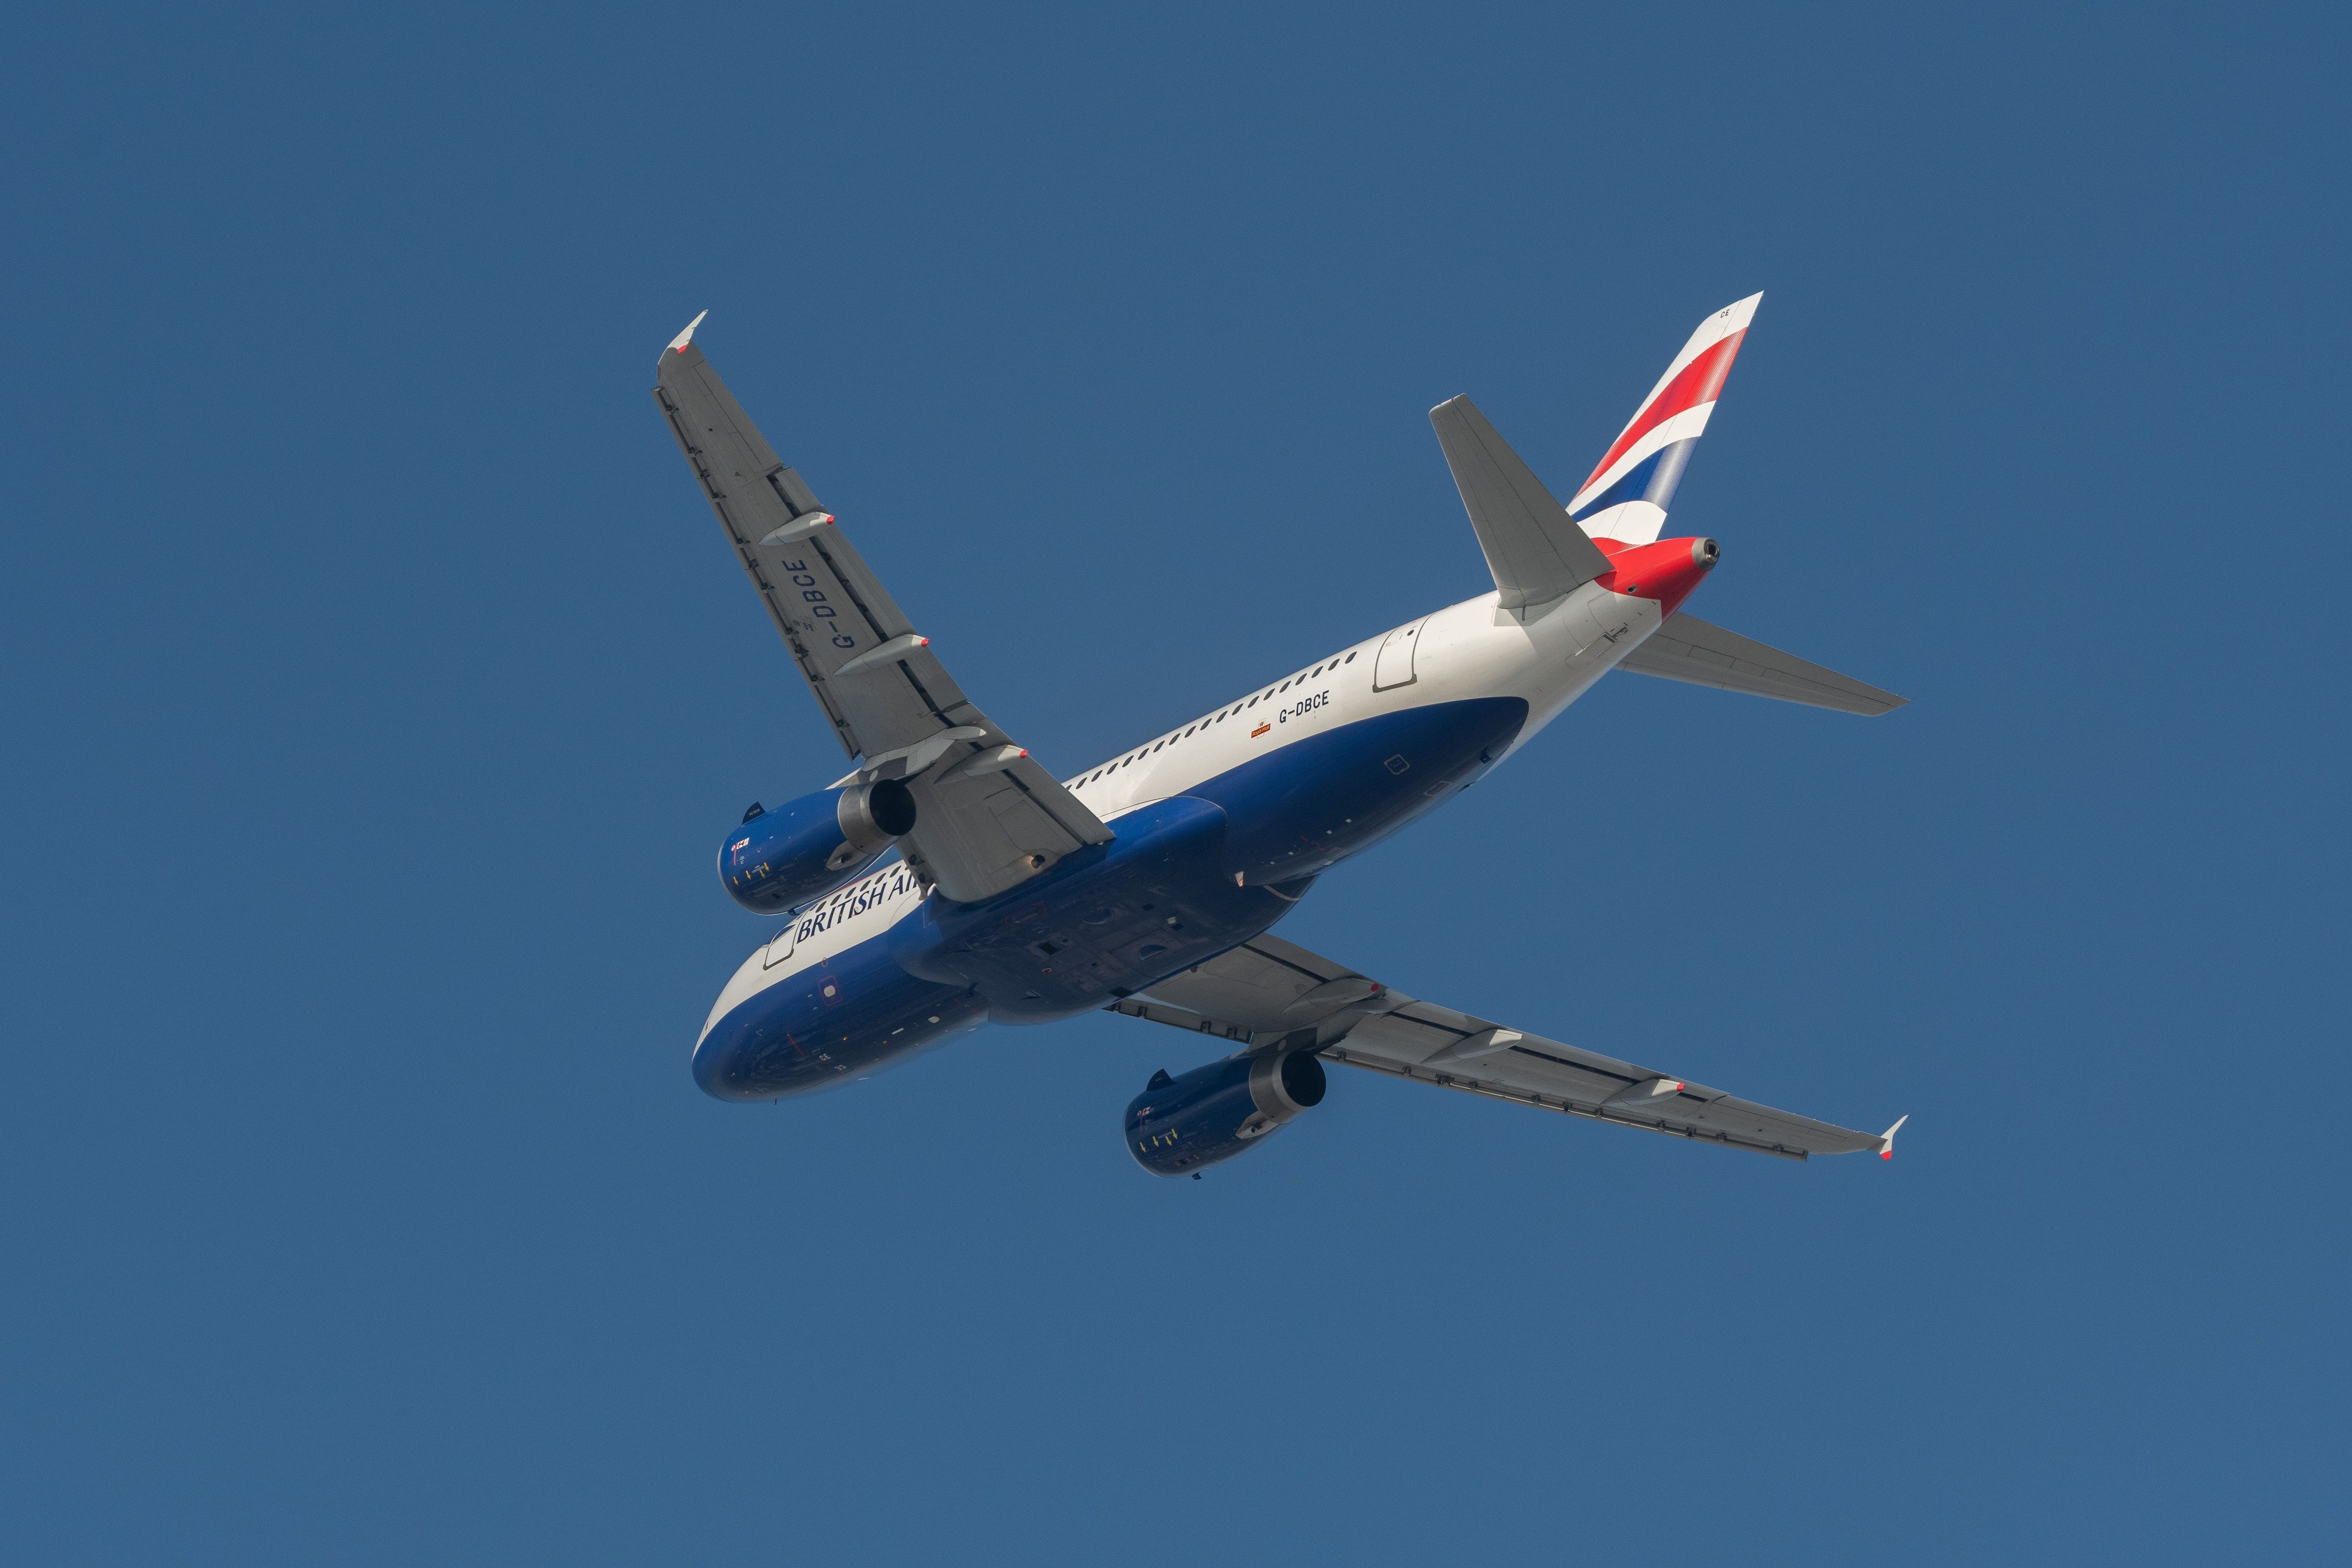 British Airways Airbus A319 aircraft taking off